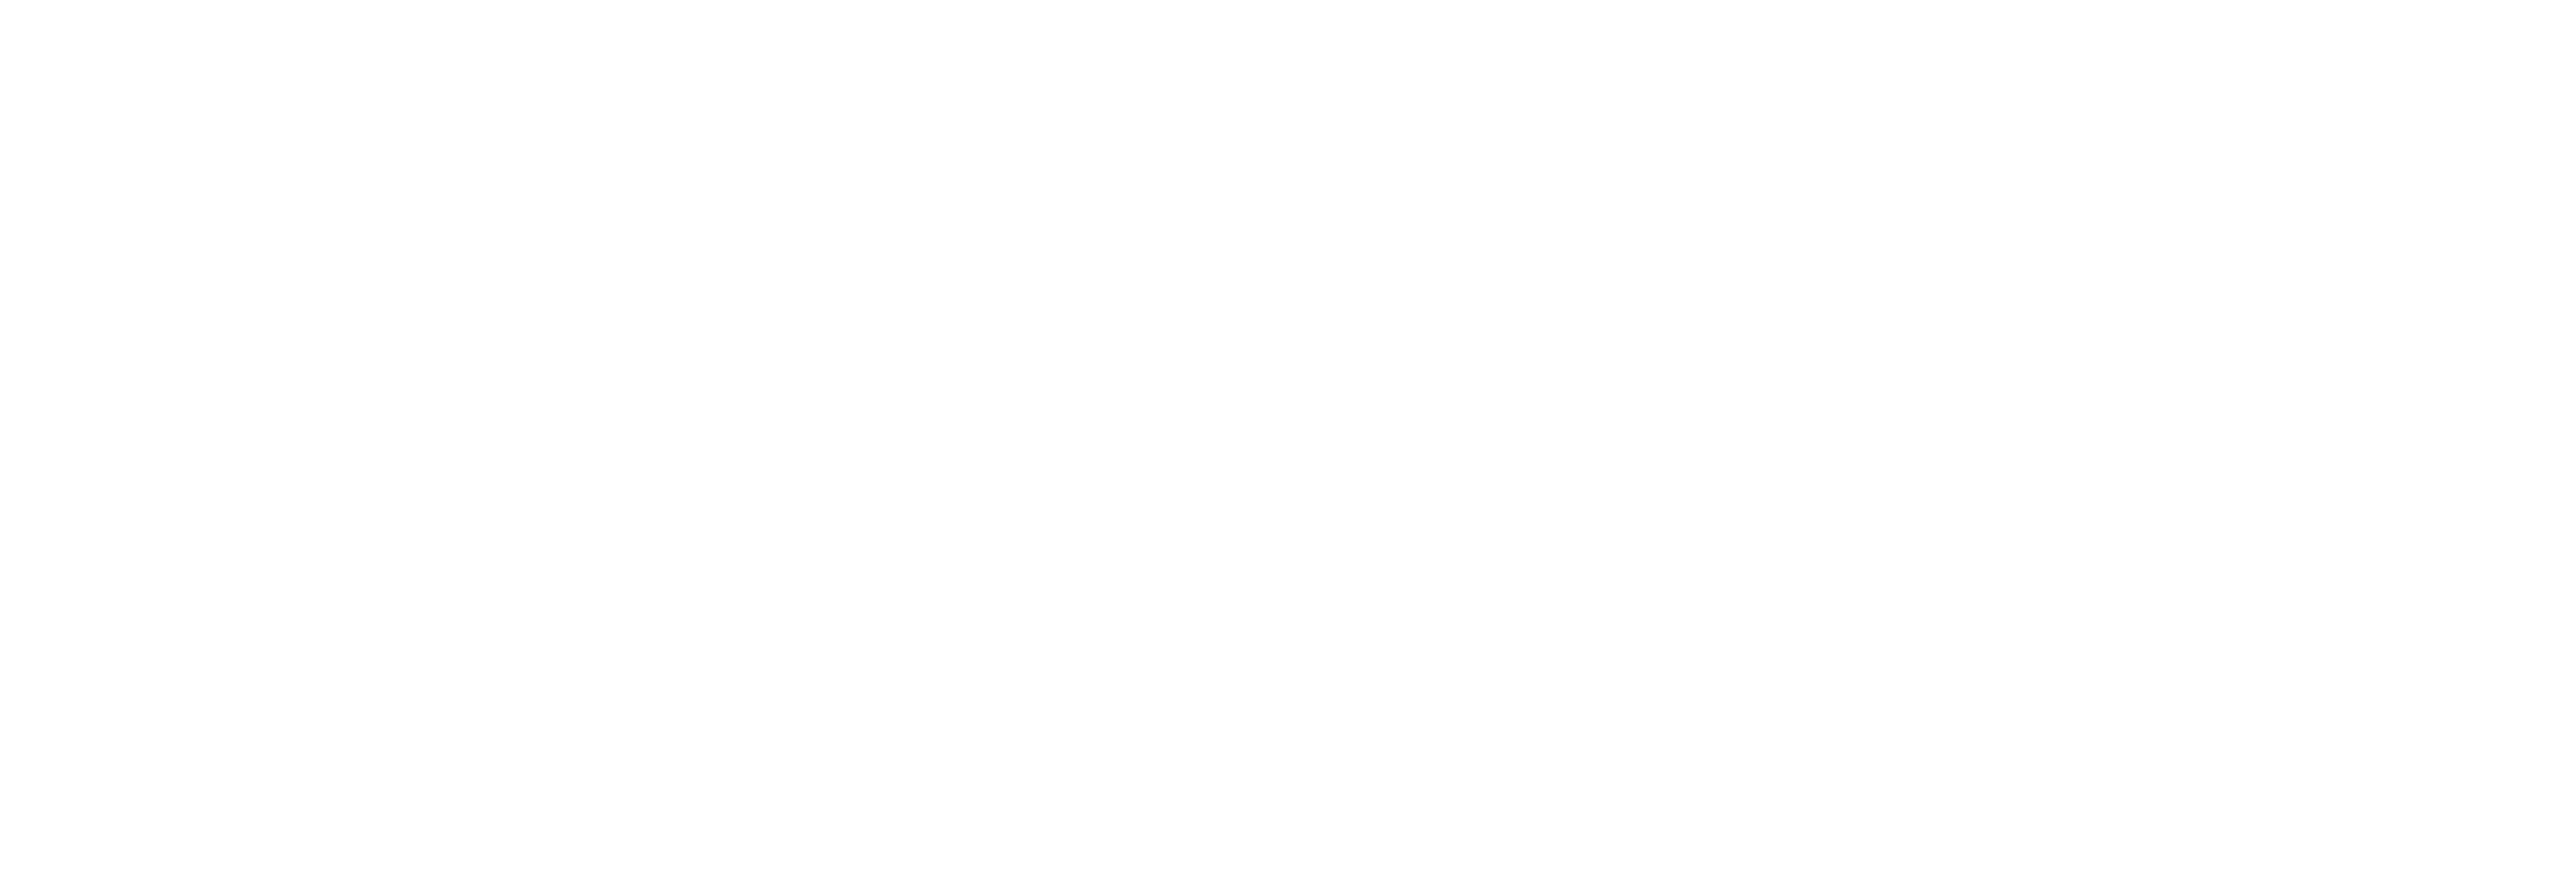 Proofpoint, Inc. logo